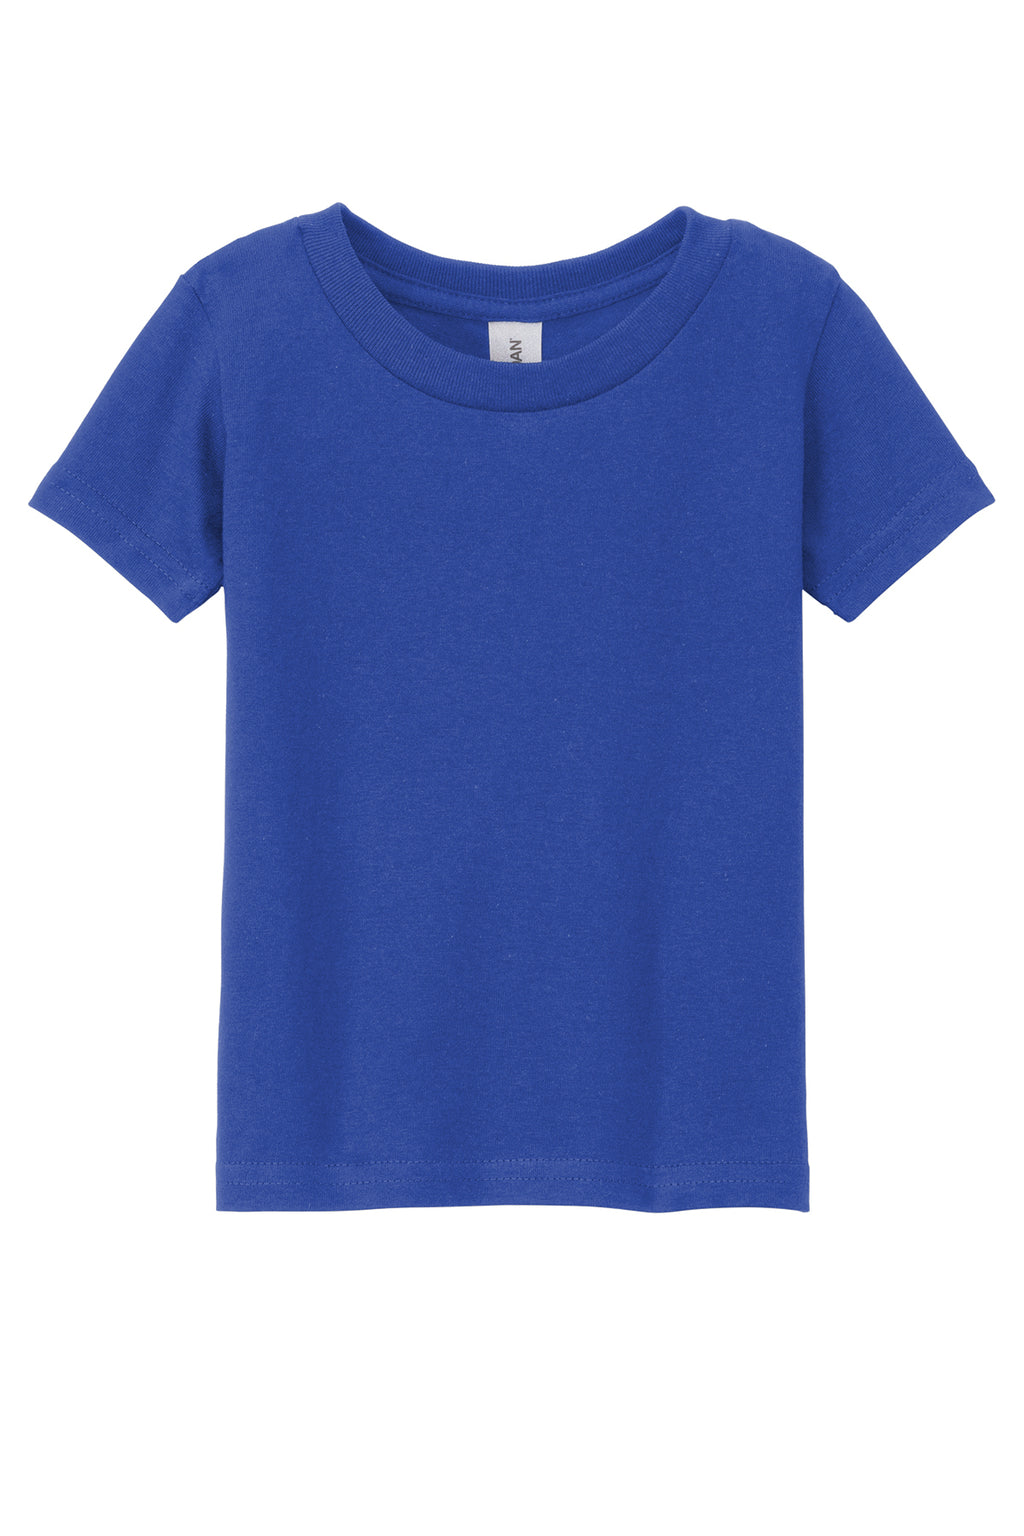 Gildan Toddler 100% Cotton Short Sleeve Shirts Royal